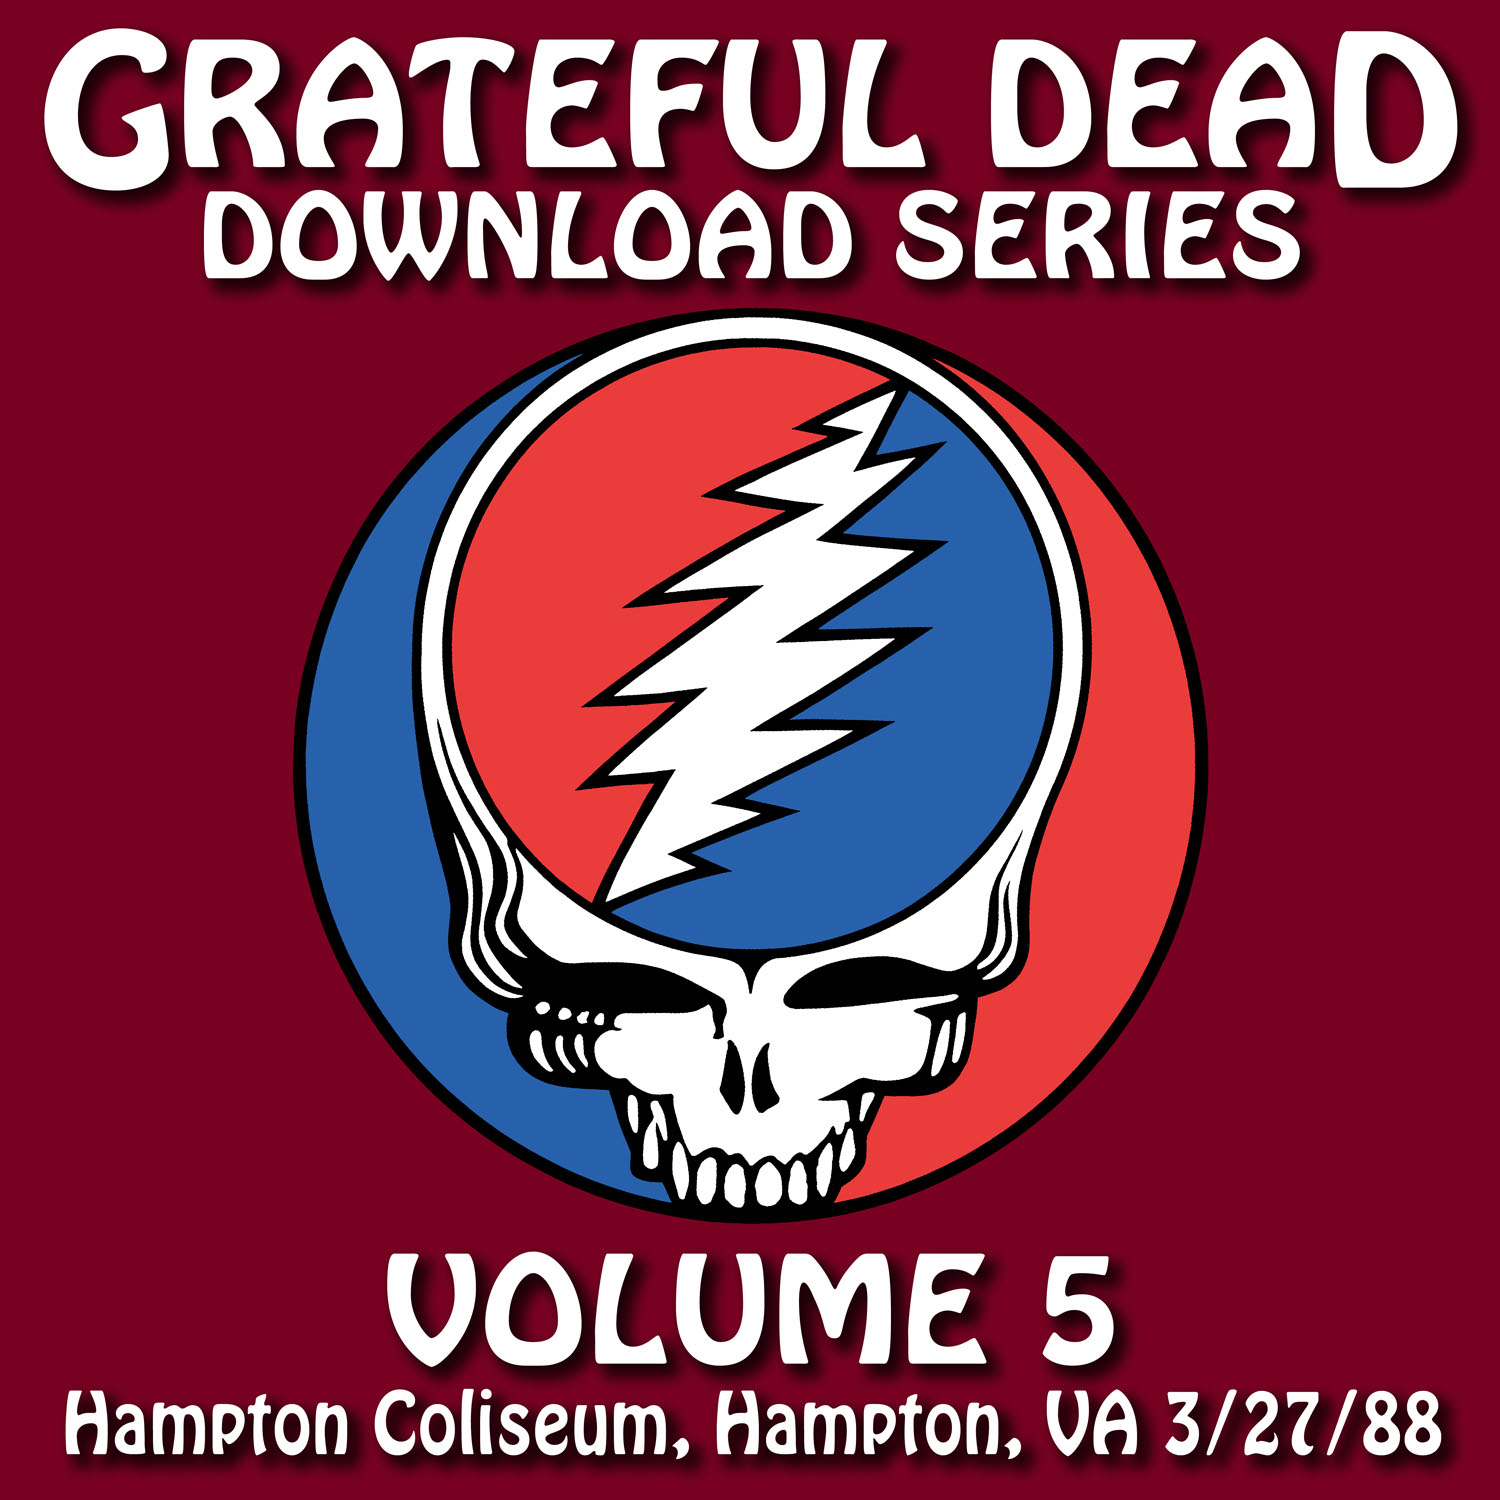 Grateful Dead Download Series 5 album cover artwork